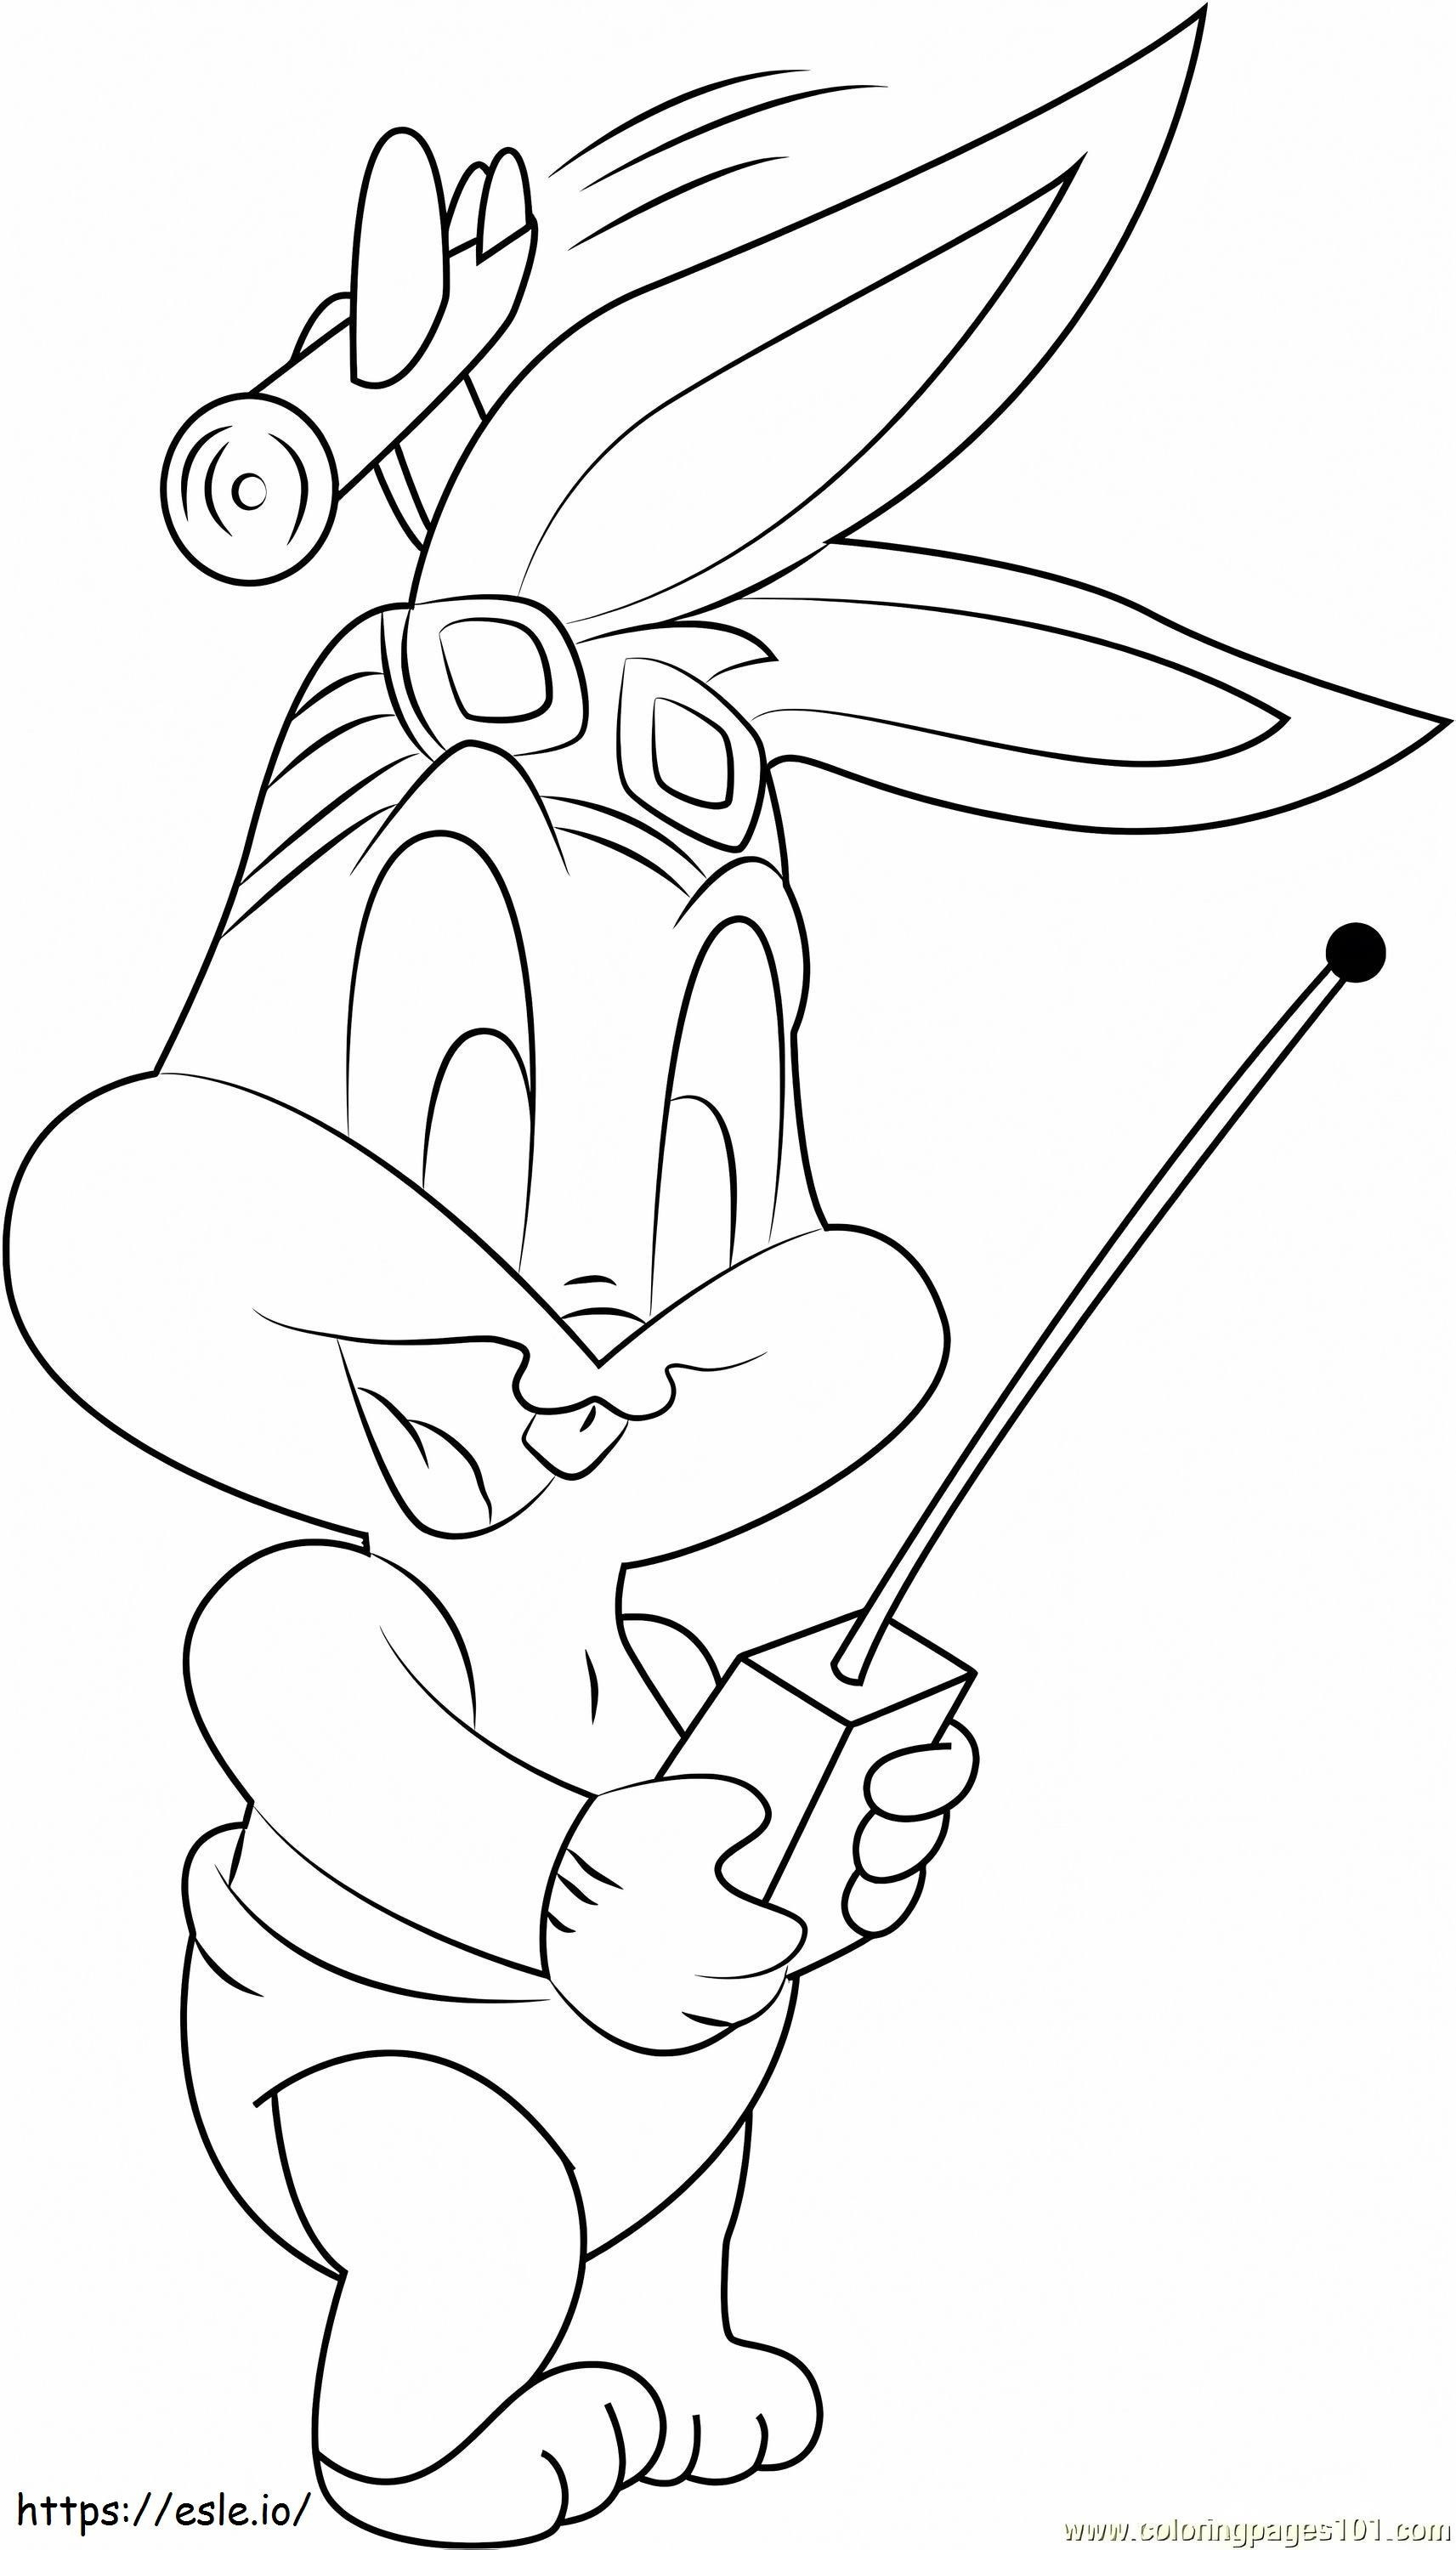 Bugs Bunny Perfecto coloring page